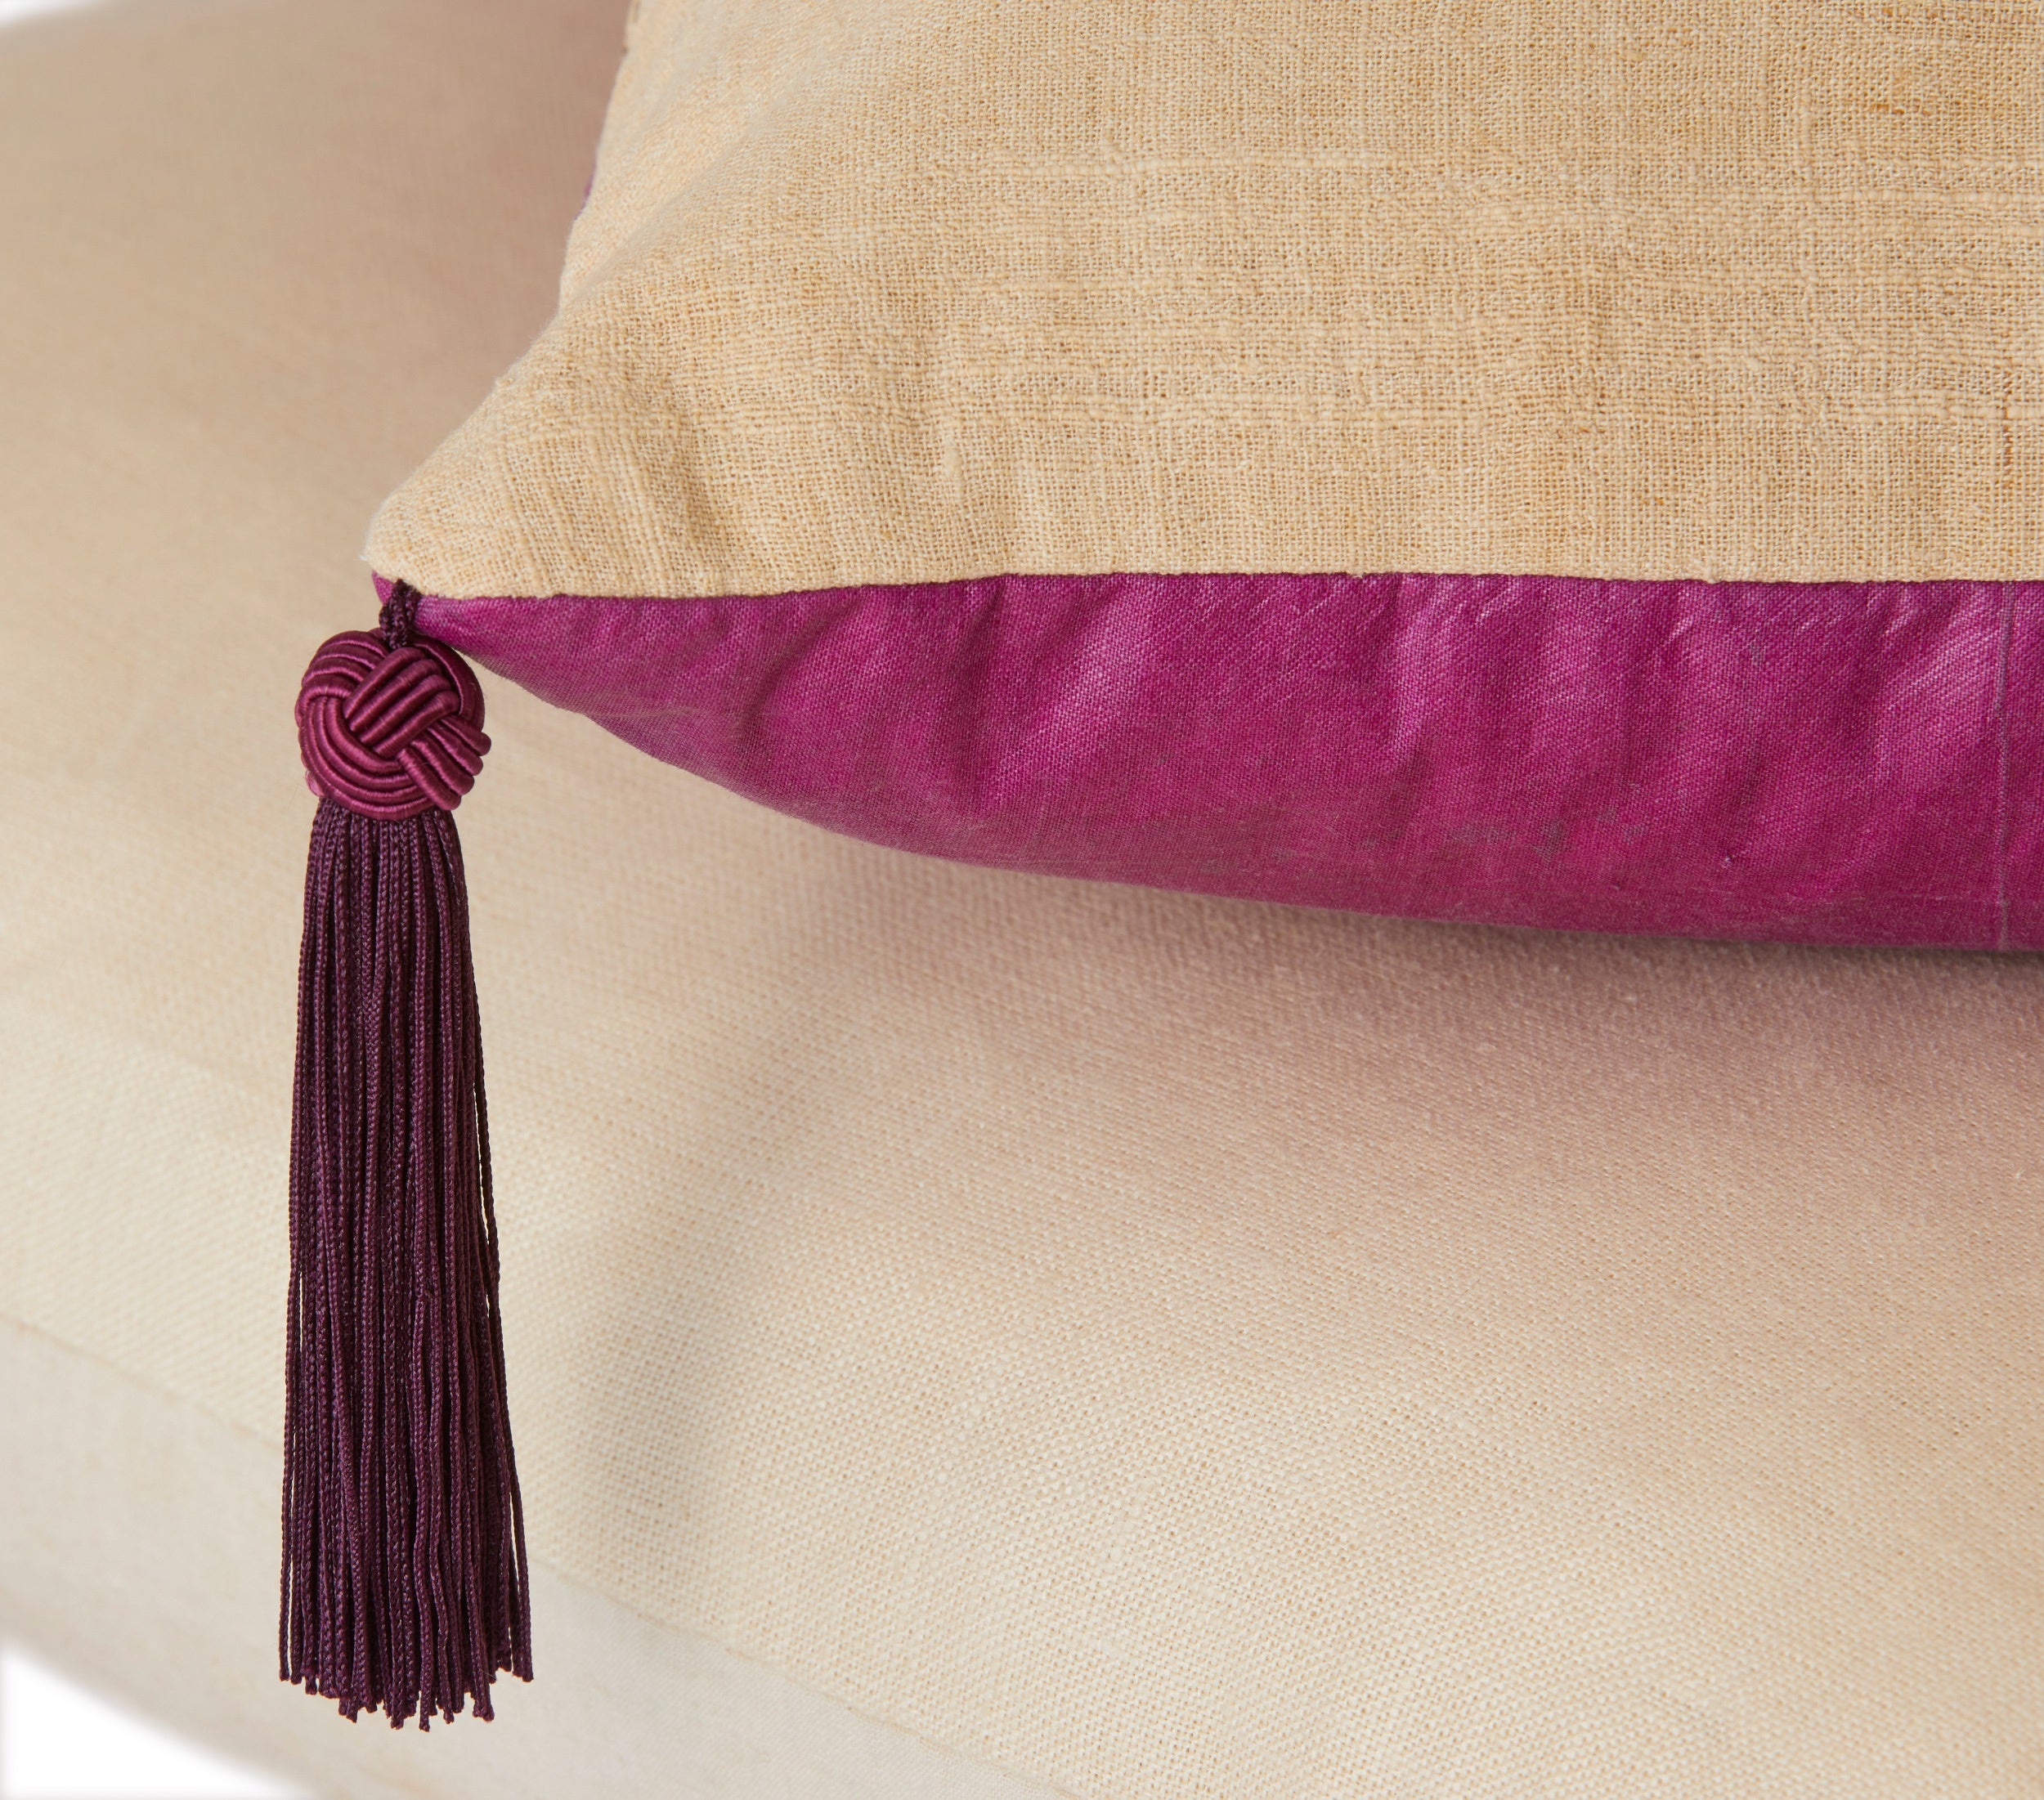 An Ottoman Embroidered Silk Thread Cushion with Silk Tassels